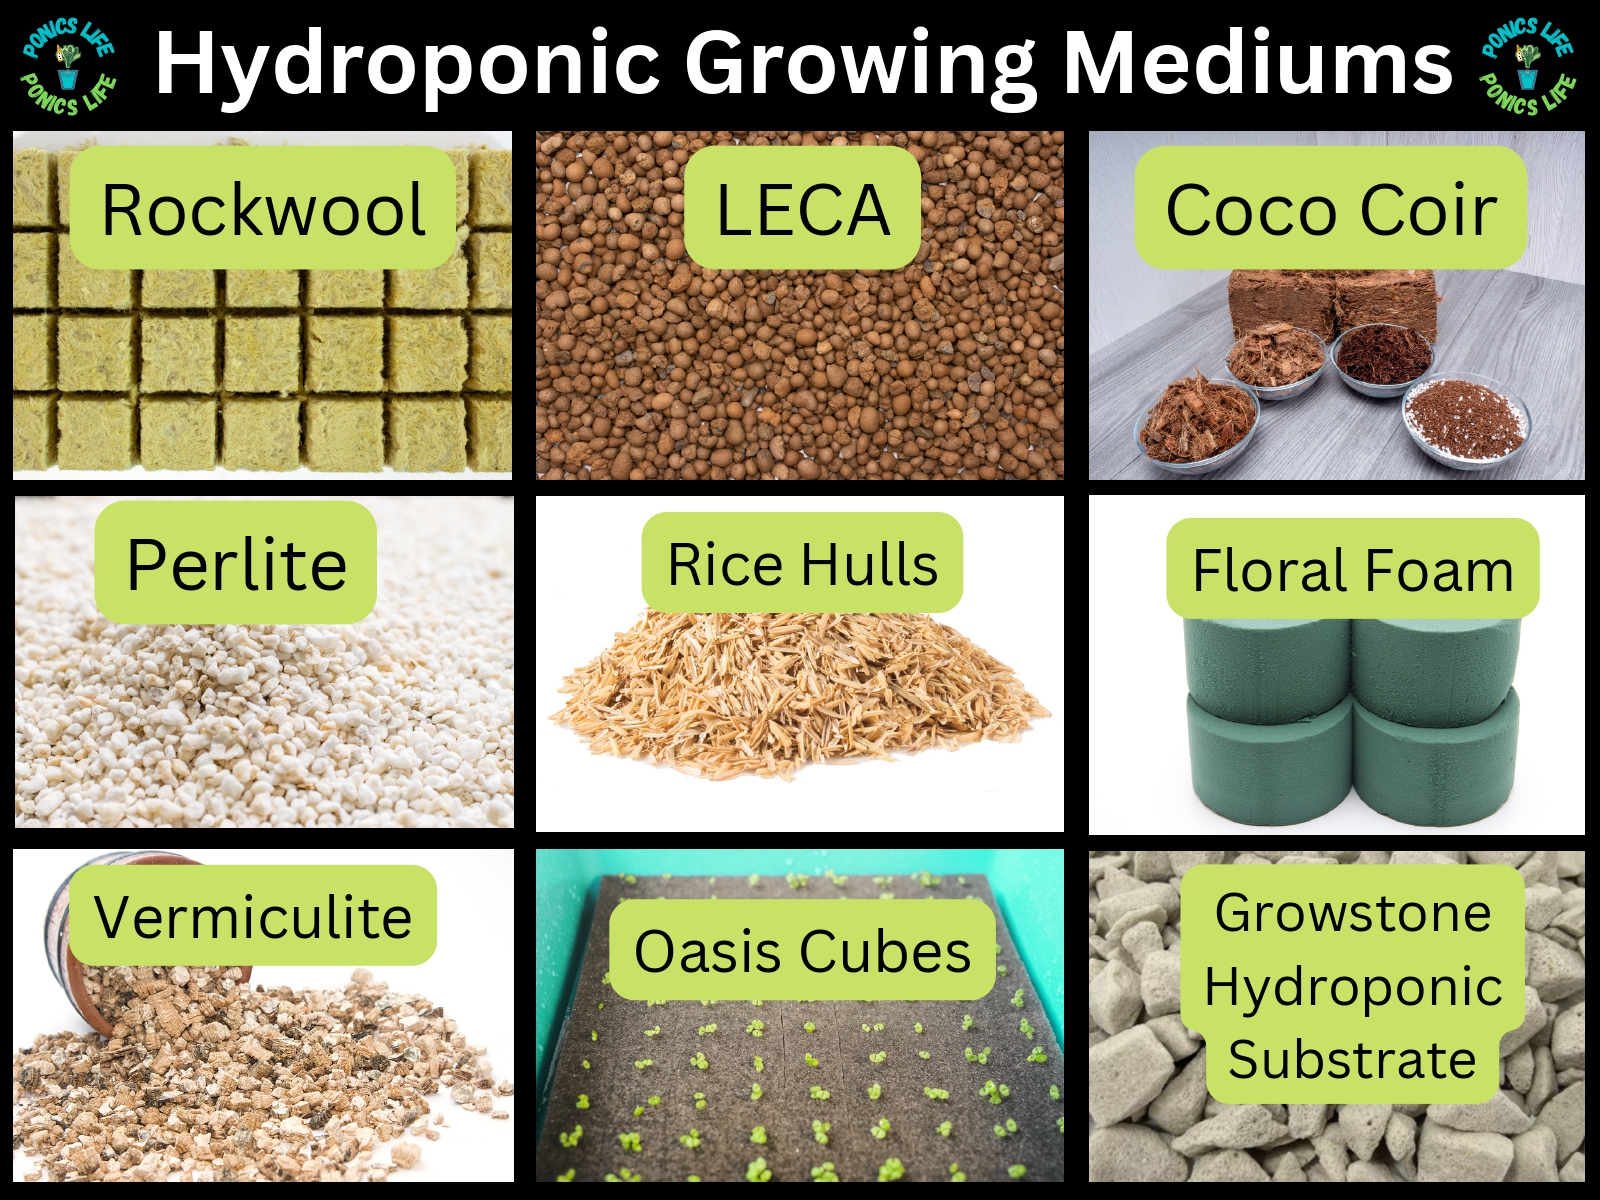 Hydroponic Growing Mediums